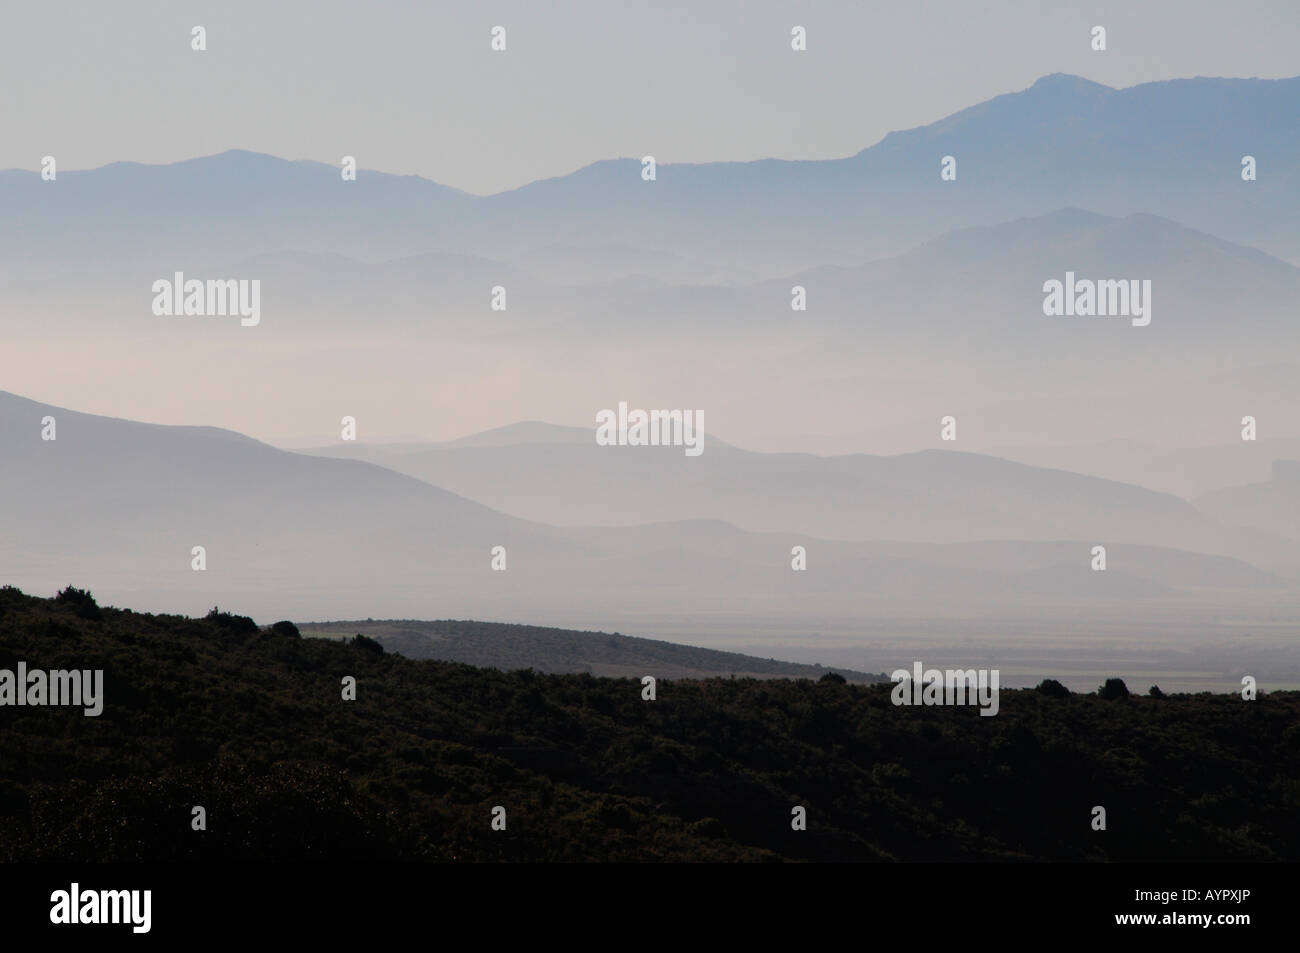 Mountain landscape covered in mist near Illueca, Zaragoza Province, Aragón, Spain, Europe Stock Photo